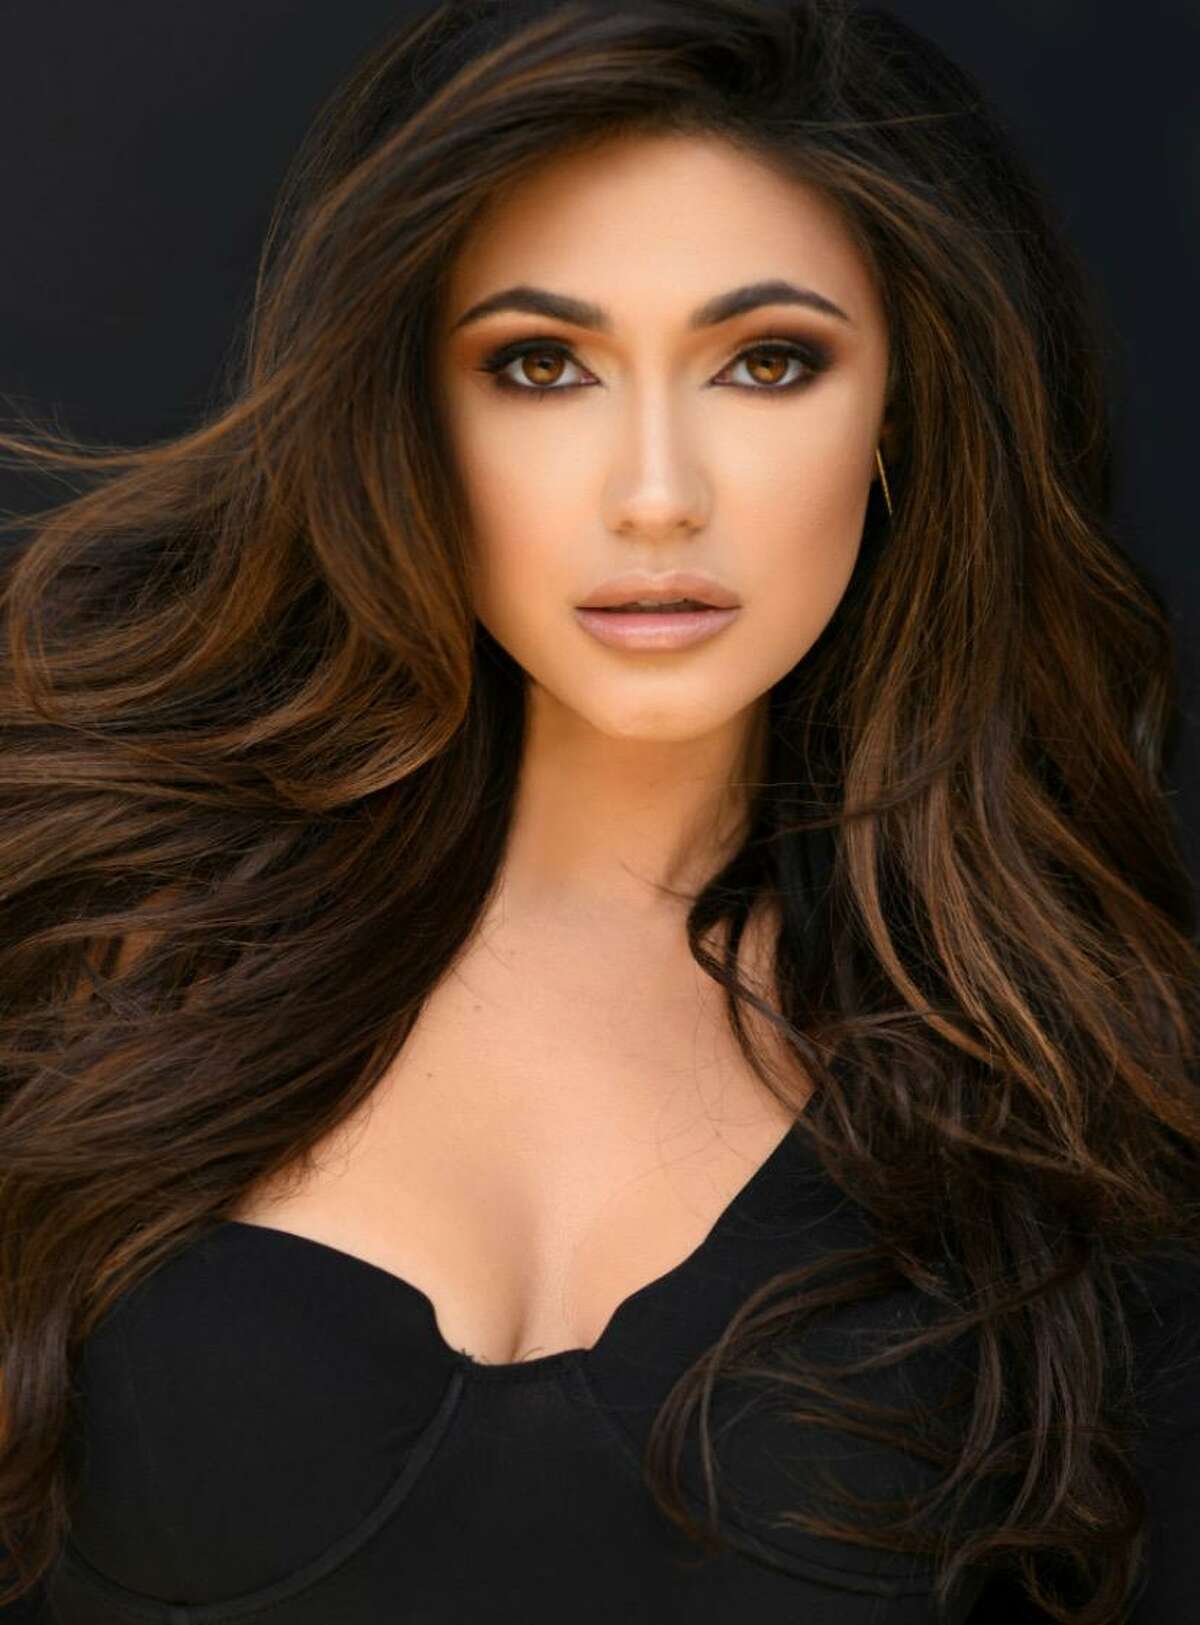 Blaine Ochoa, 26, is Miss Houston USA in the Miss Texas USA 2020 pageant.